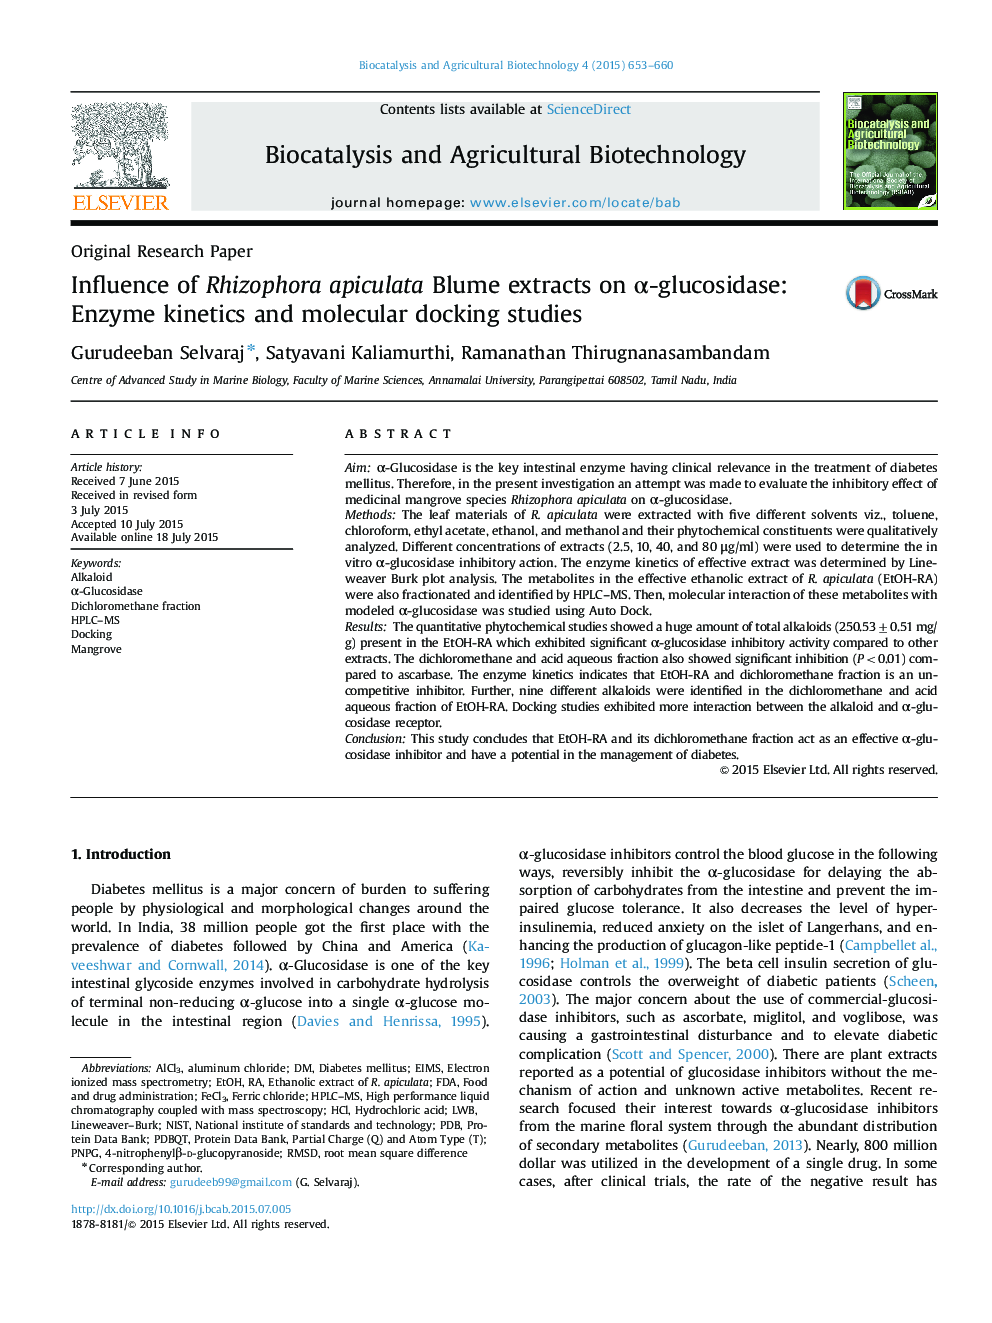 Influence of Rhizophora apiculata Blume extracts on α-glucosidase: Enzyme kinetics and molecular docking studies